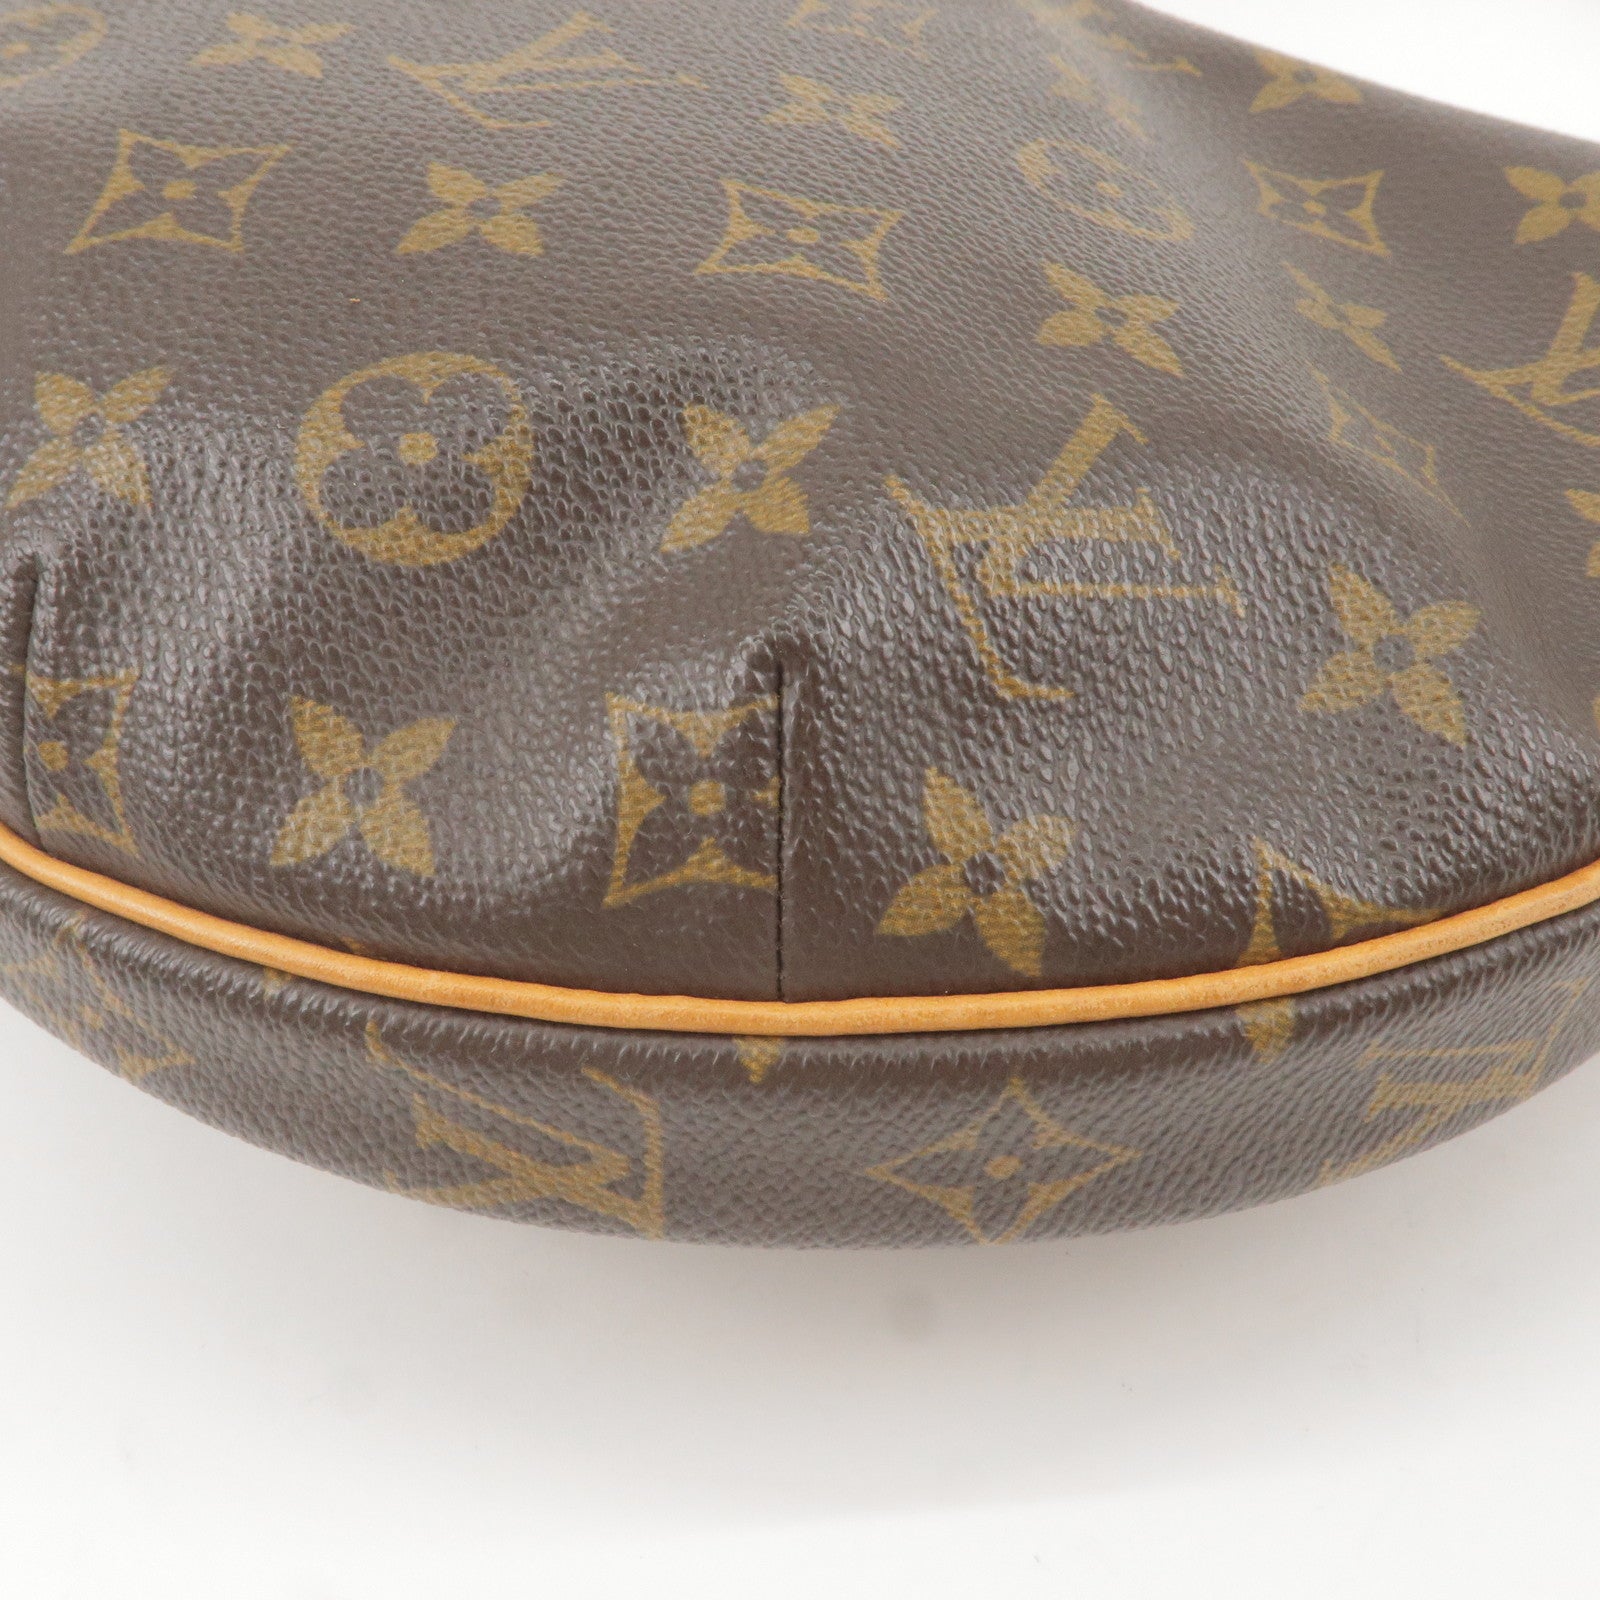 Buy Louis Vuitton monogram LOUIS VUITTON Croissant MM Monogram M51512  Shoulder Bag Brown / 250737 [Used] from Japan - Buy authentic Plus  exclusive items from Japan